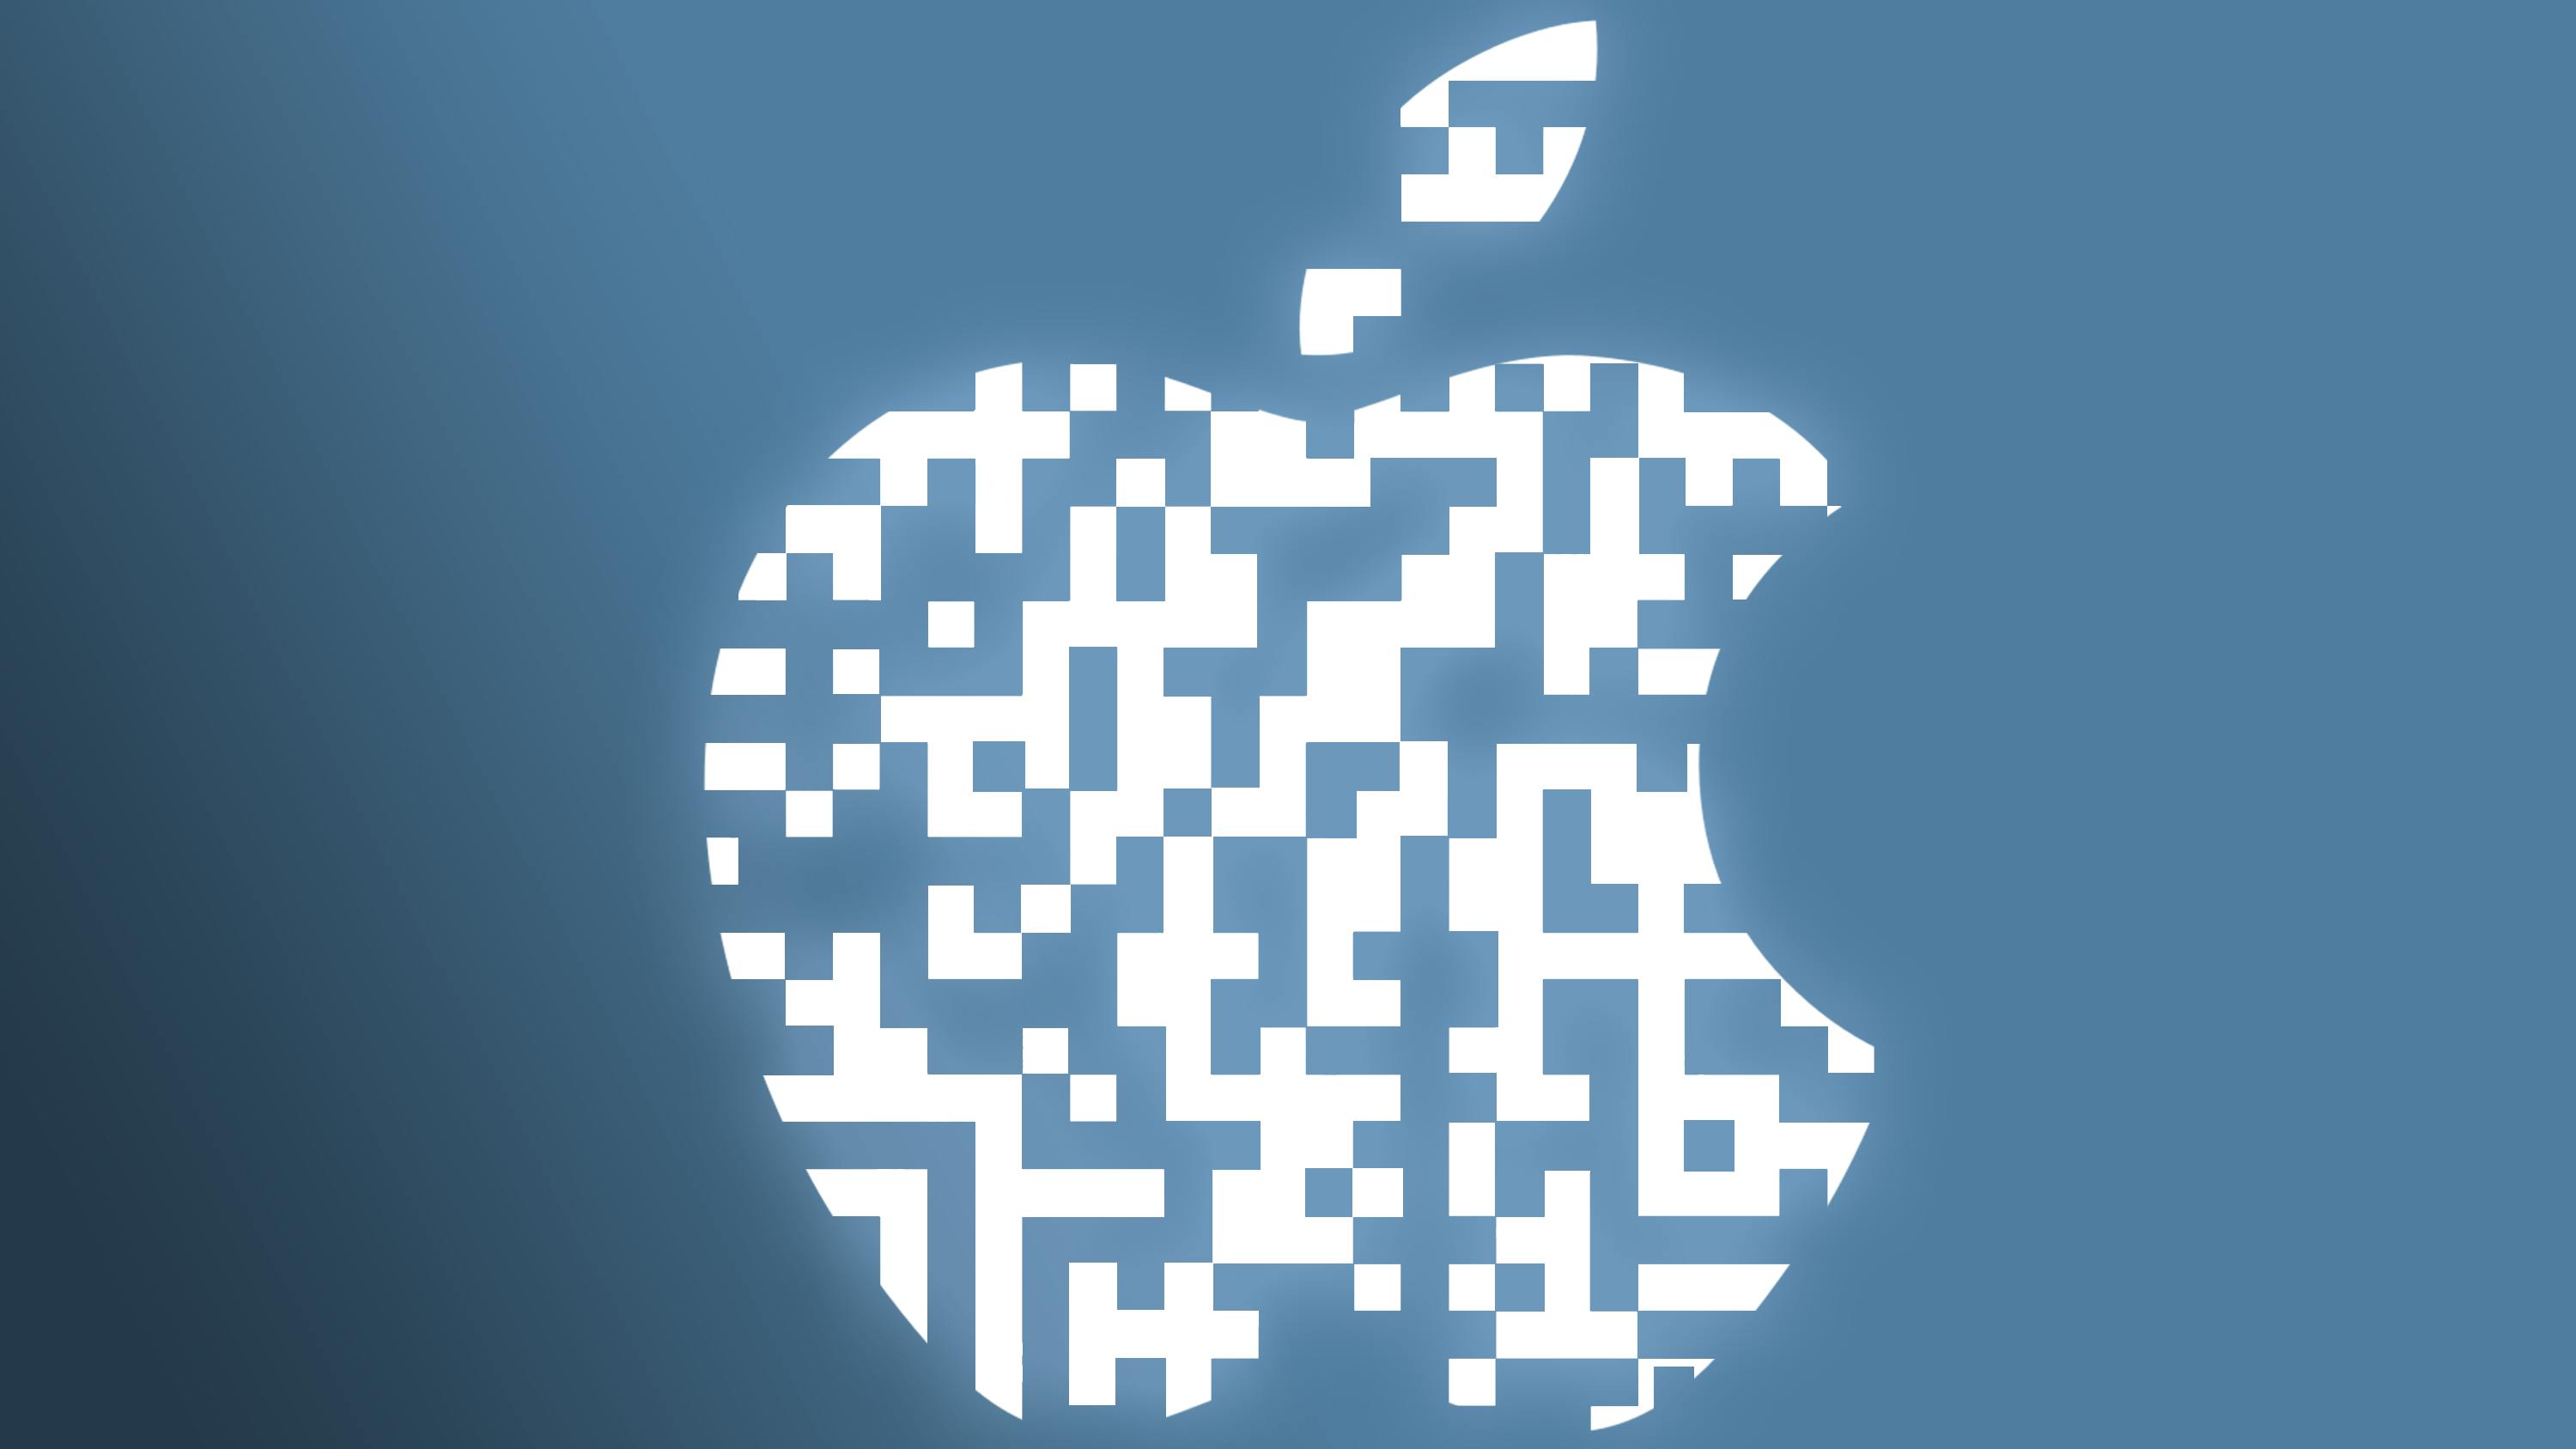 How a Hidden Bar Code in iPhone Screens Saved Apple Hundreds of